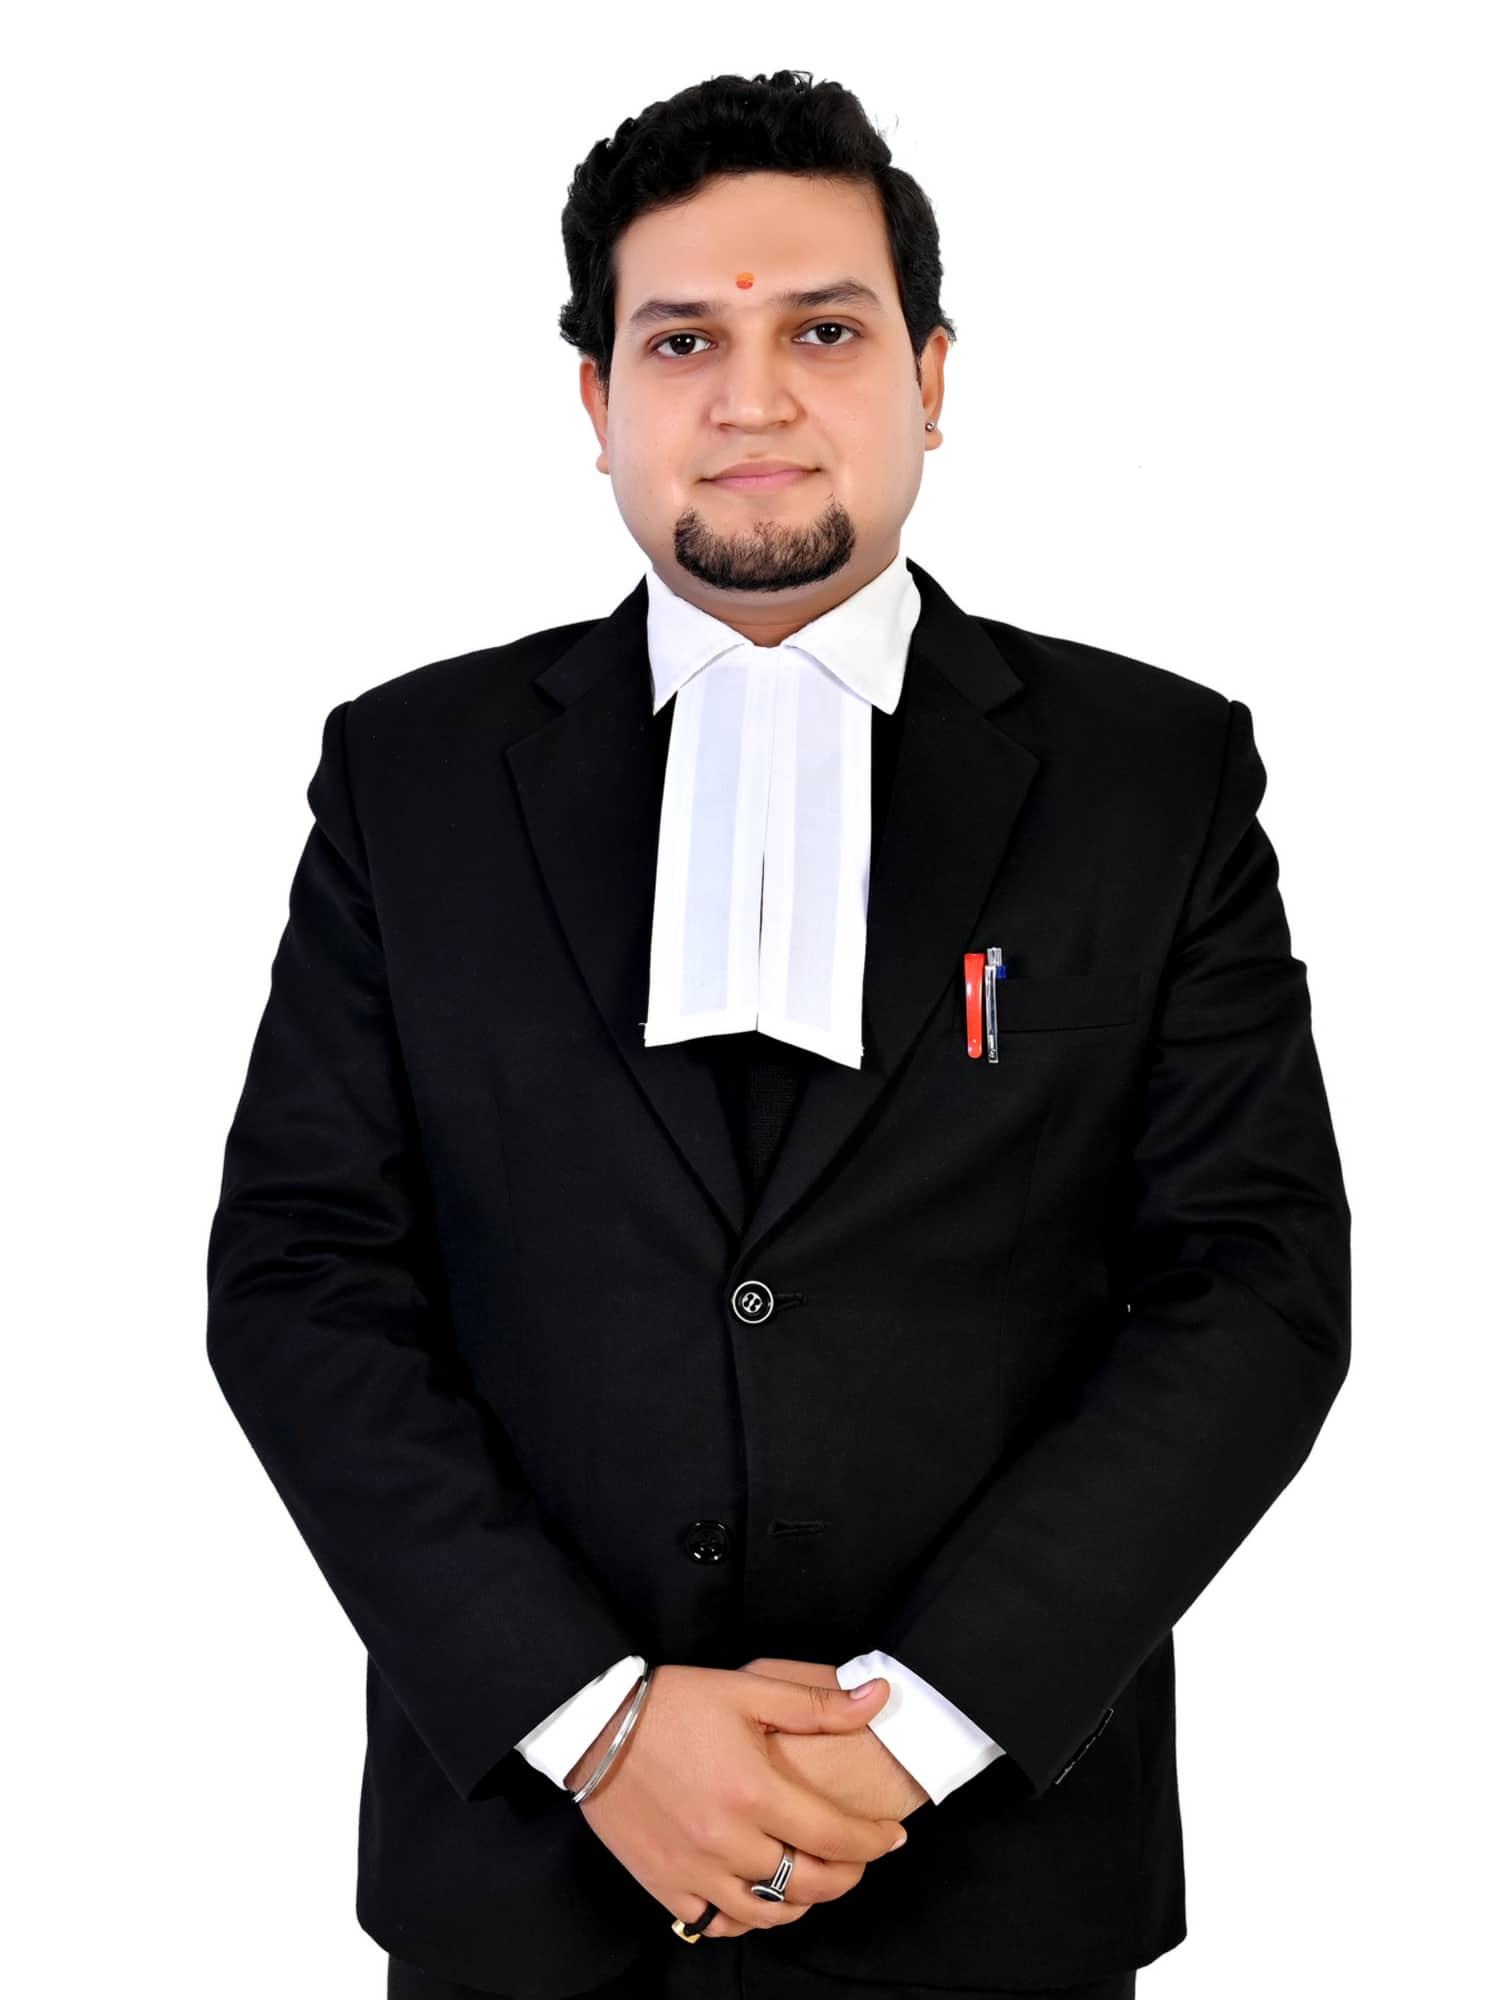 best criminal lawyer in delhi